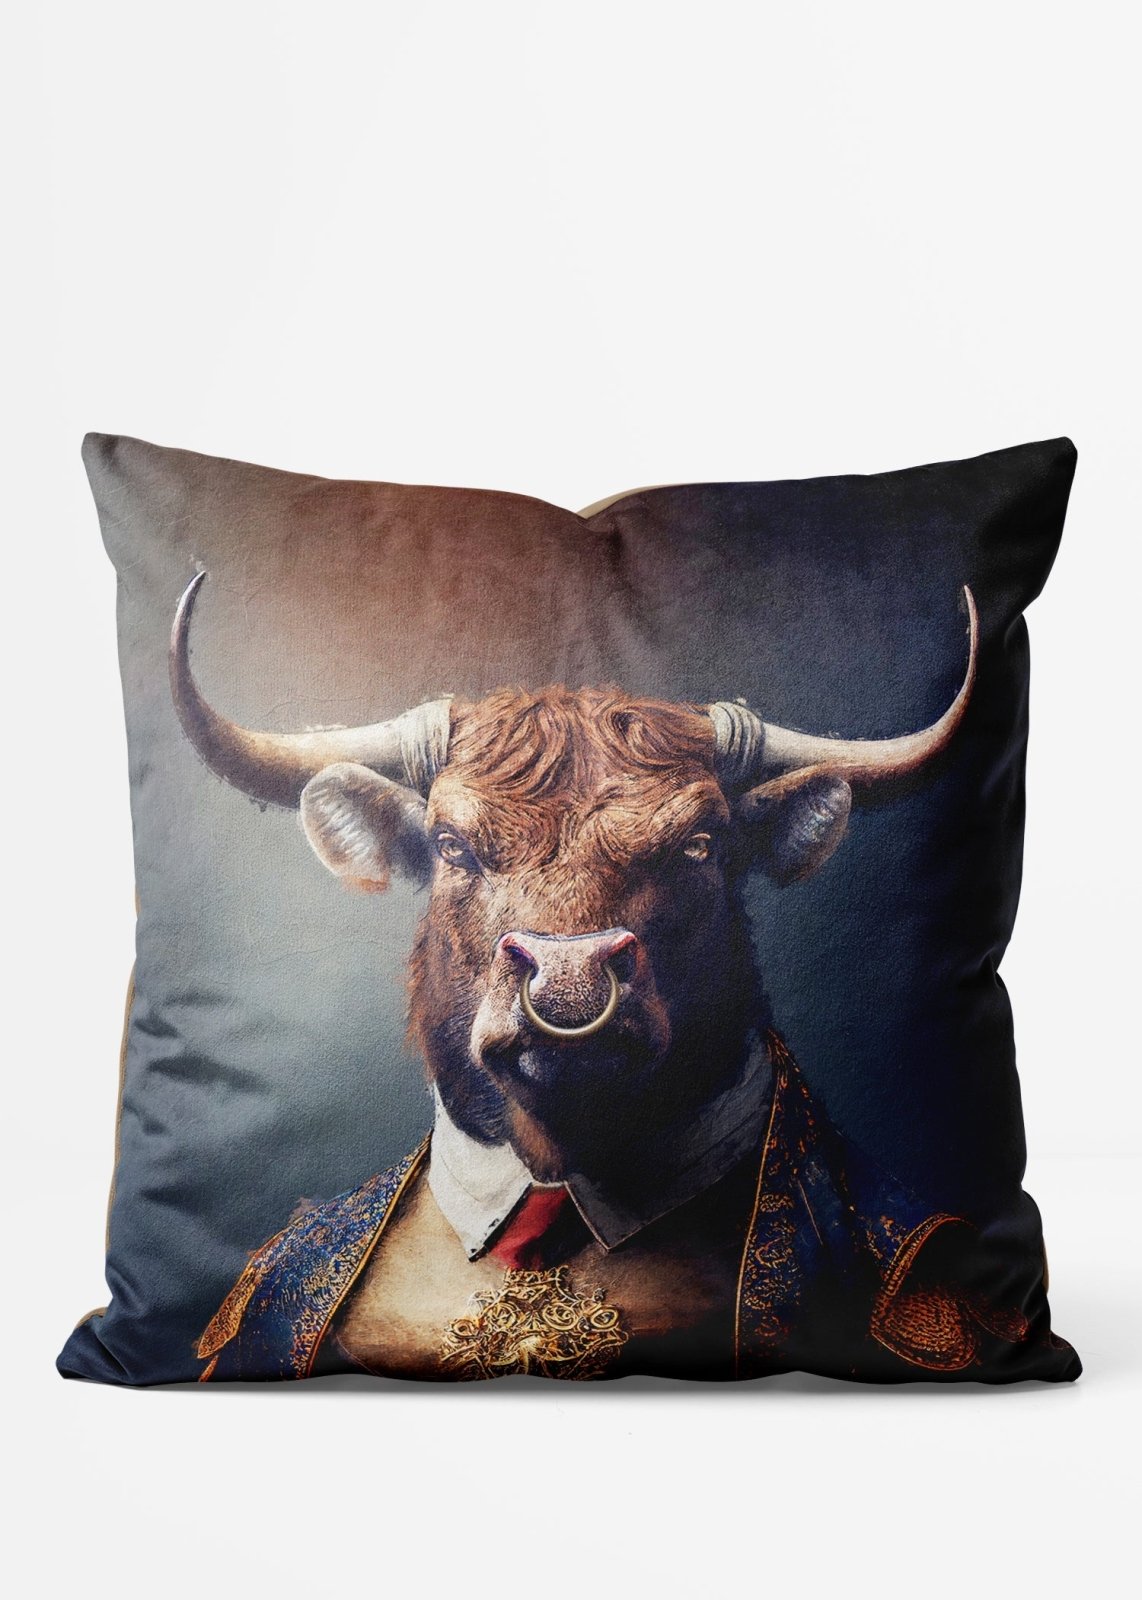 Bull Animal Portrait Cushion